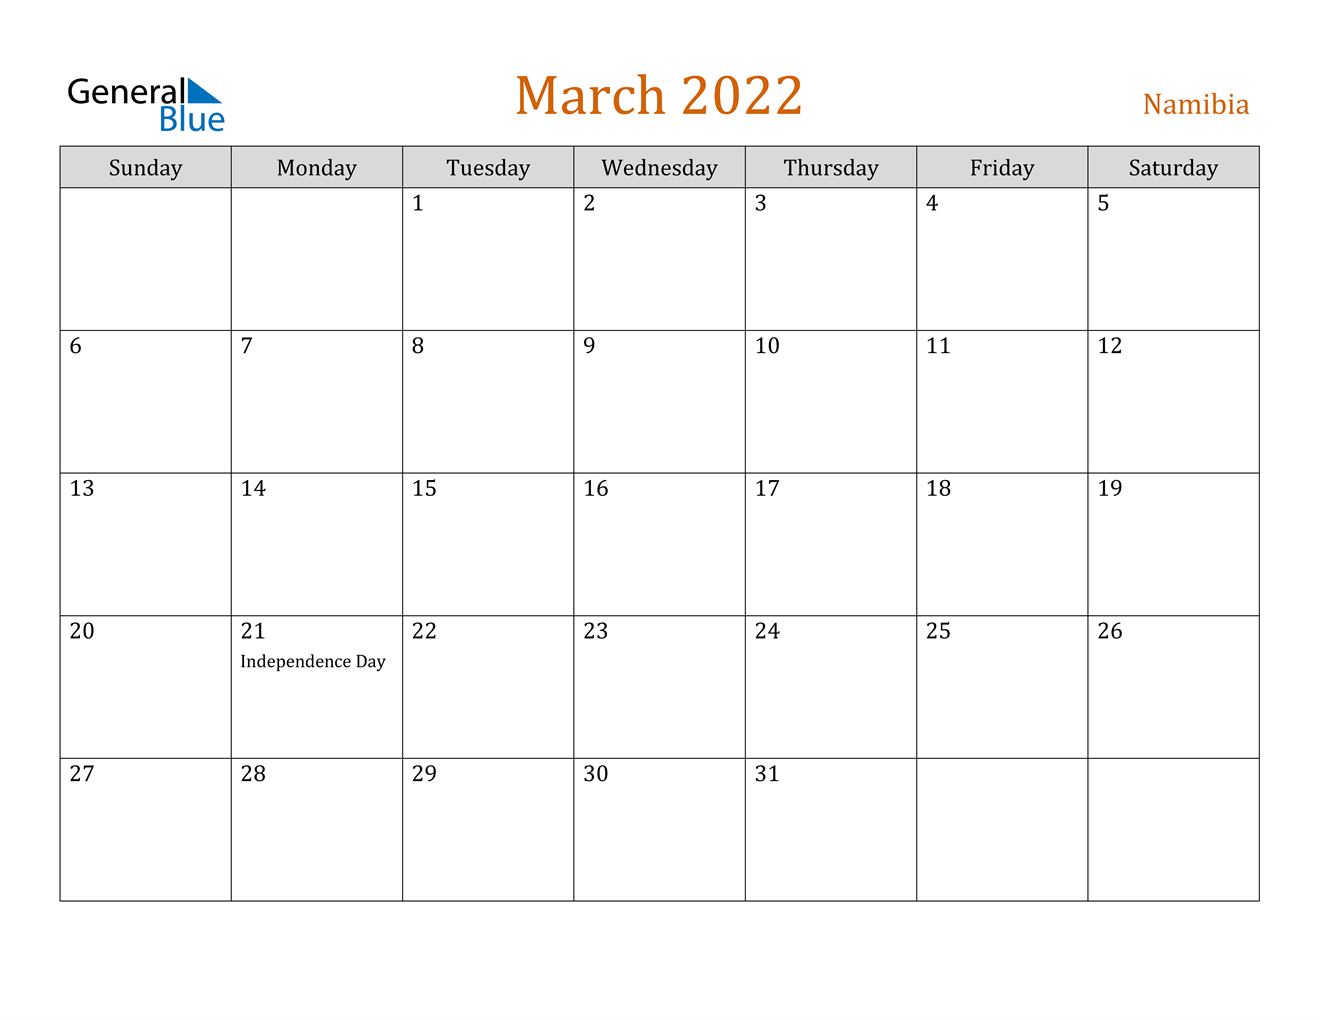 March 2022 Calendar - Namibia